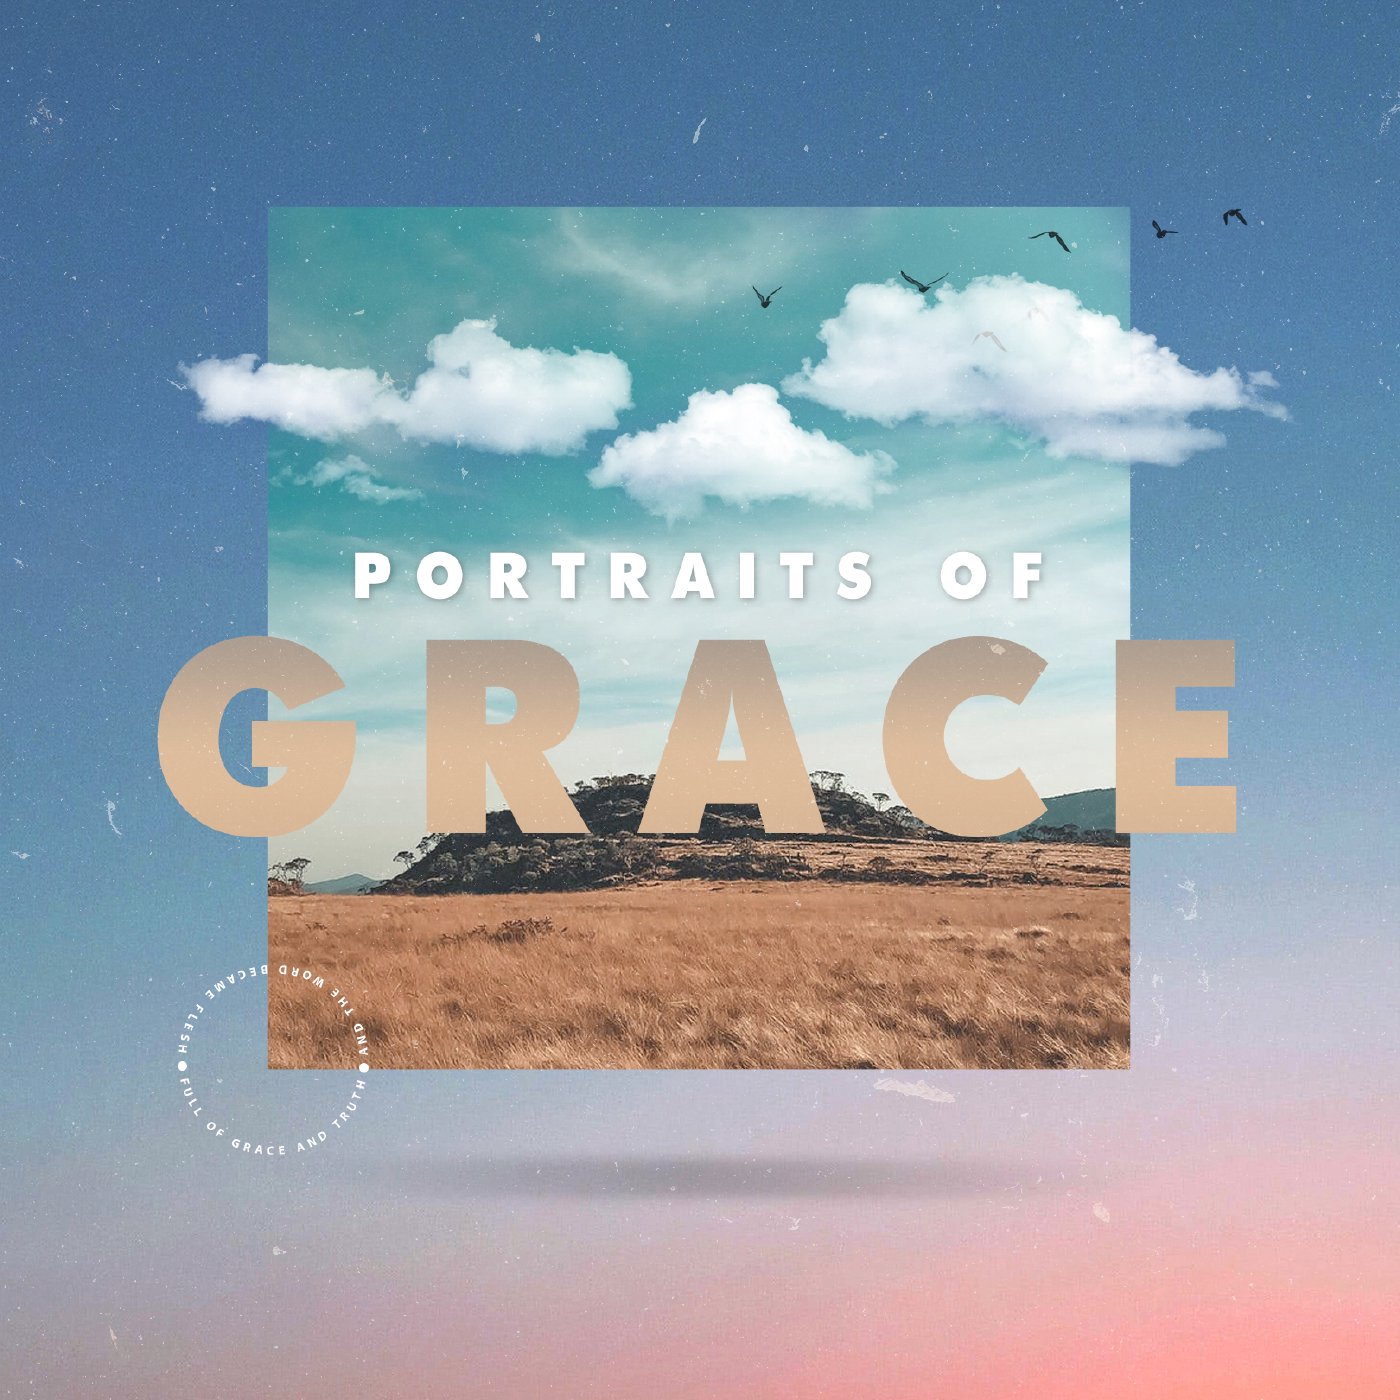 Grace to Follow Jesus